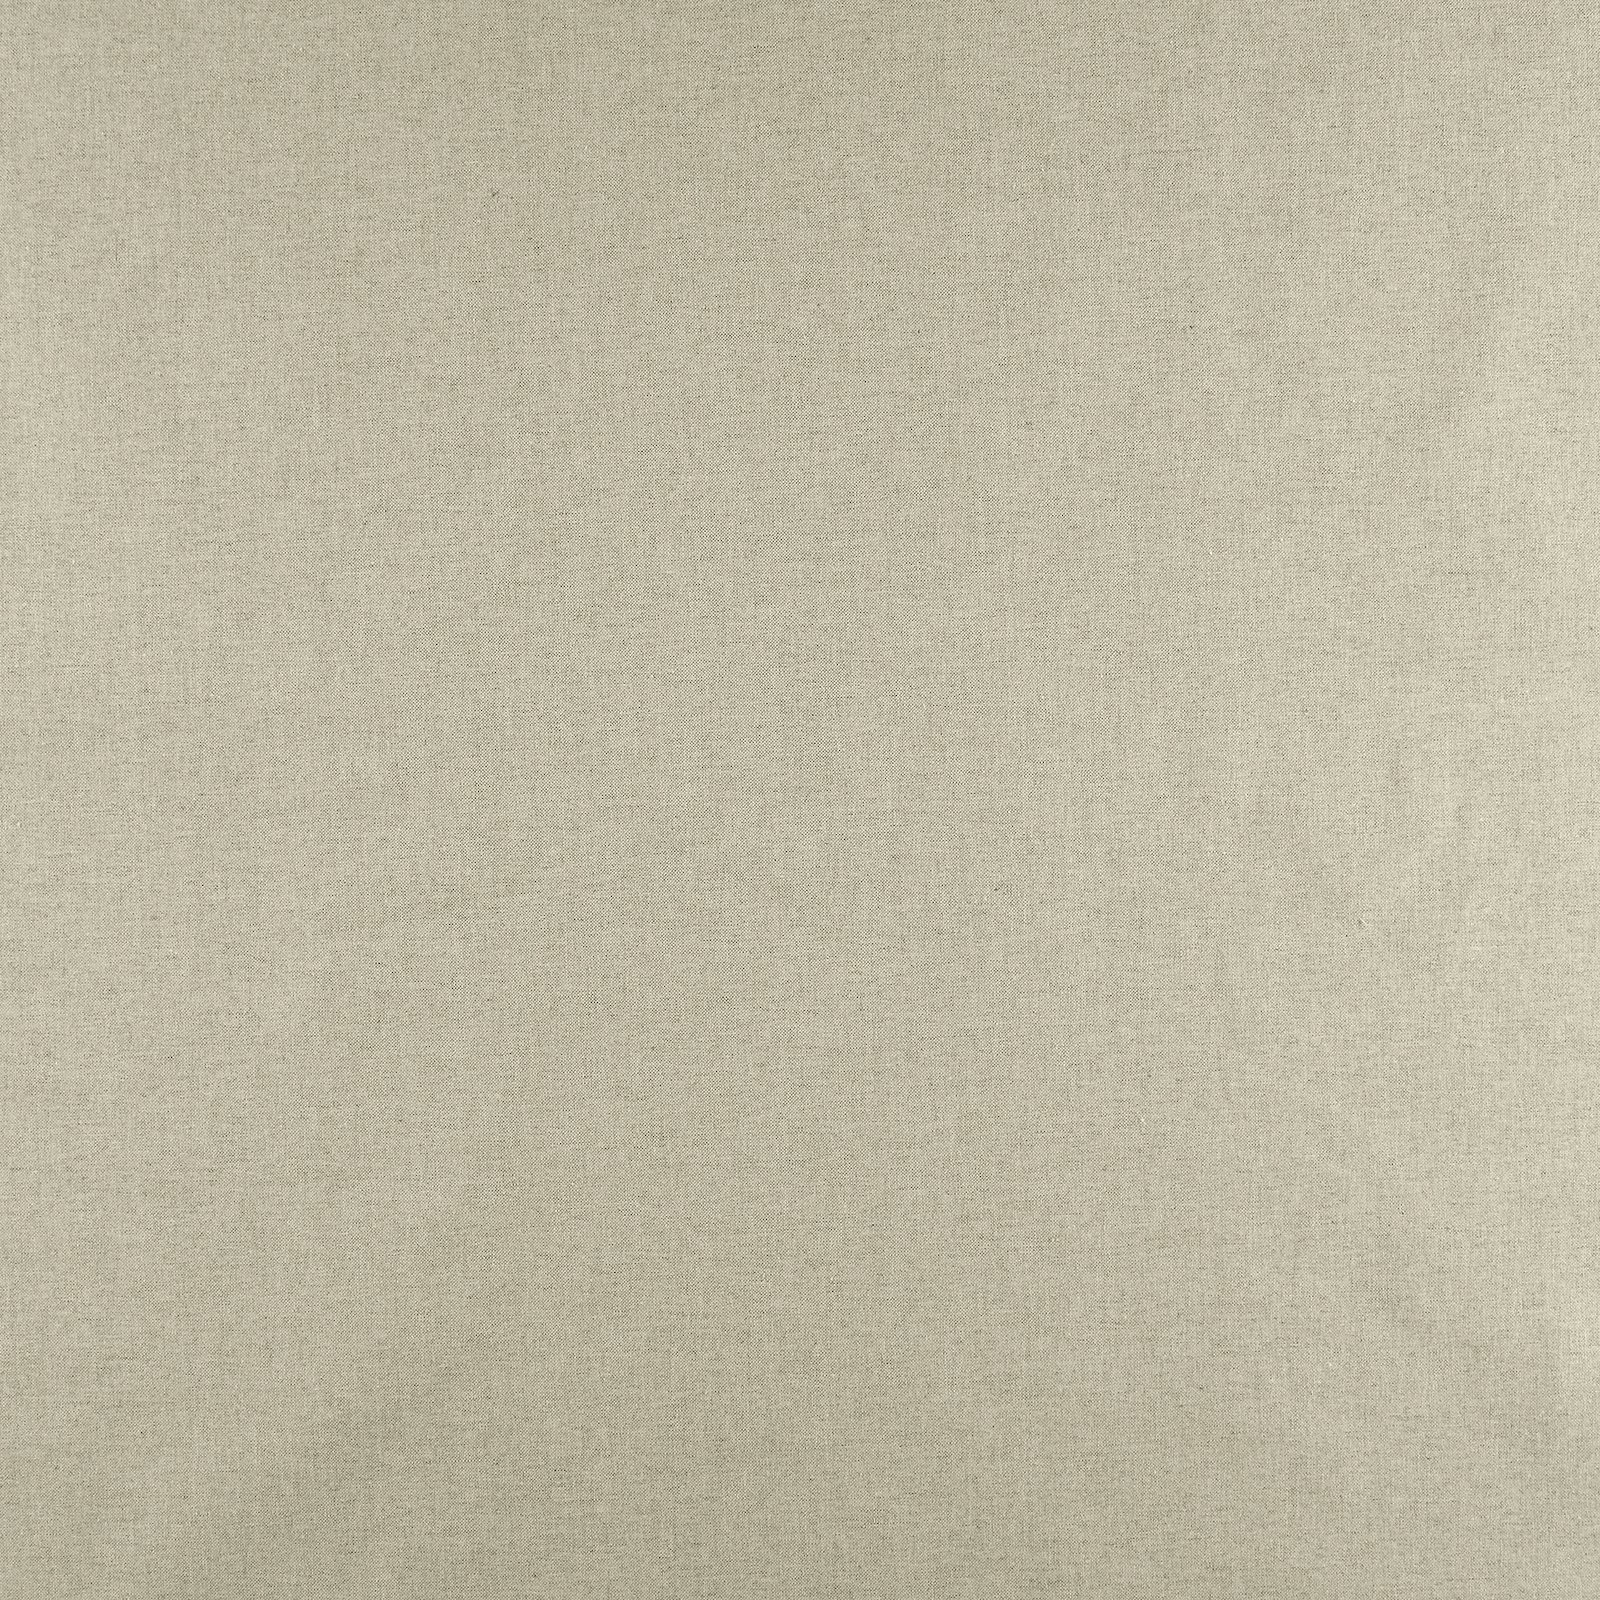 Tekstilvoksdug hørlook/lys grå 870284_pack_solid